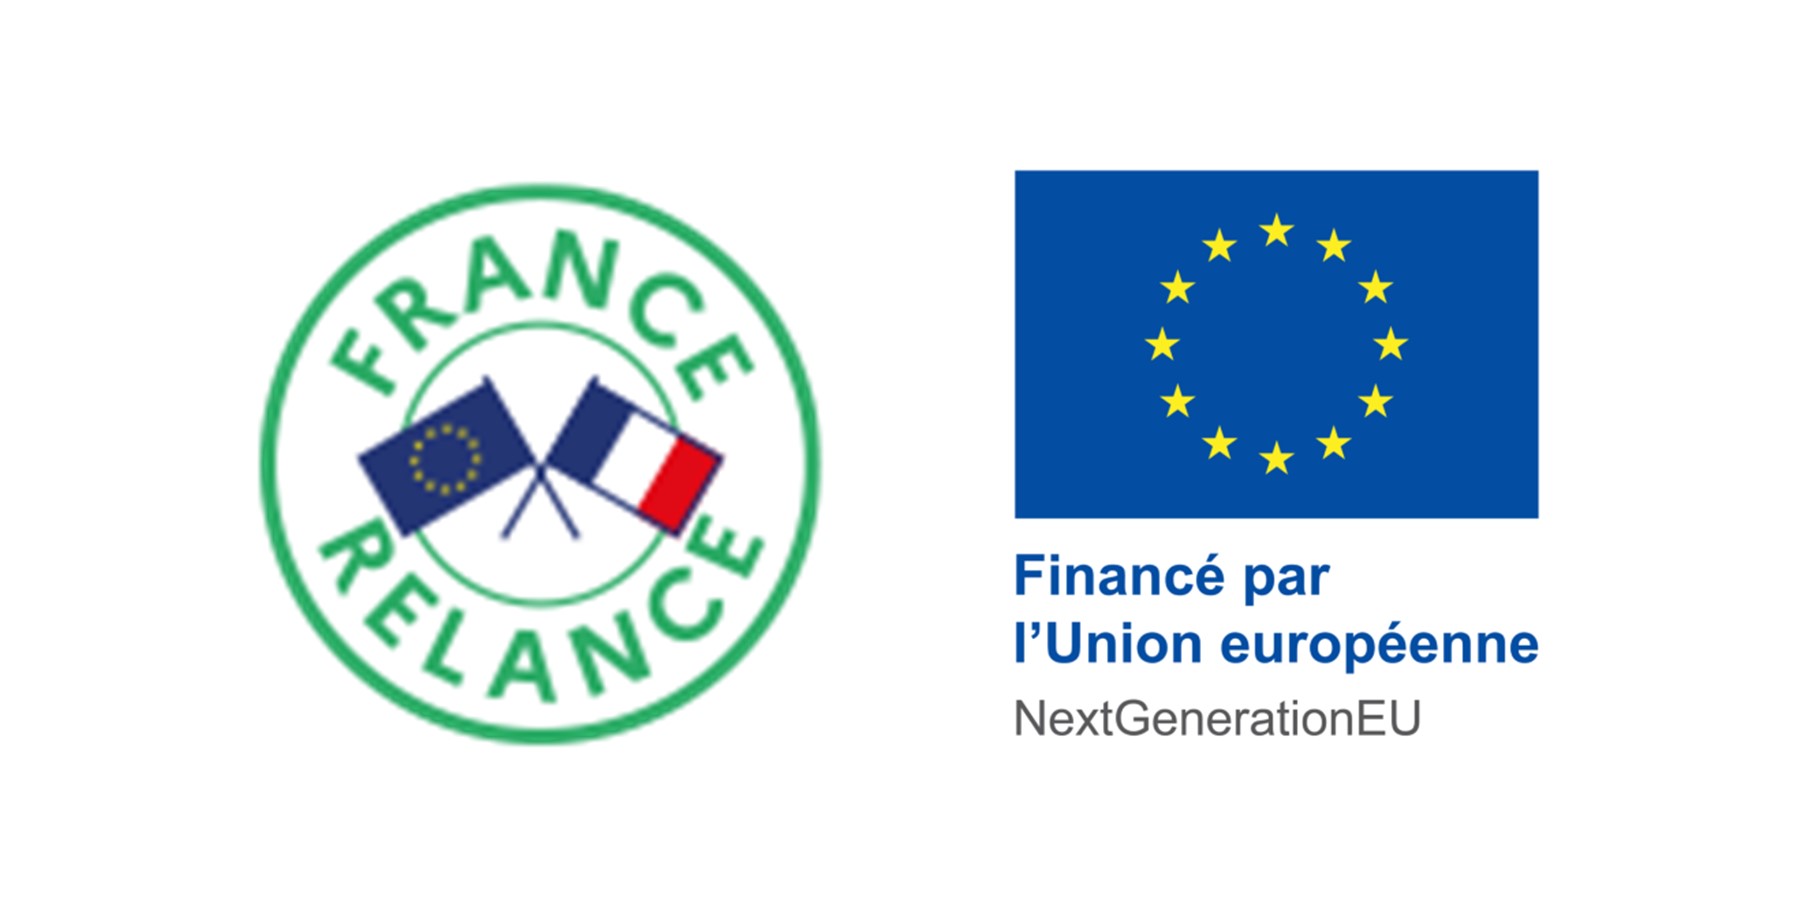 Bloc logos France Relance et UE